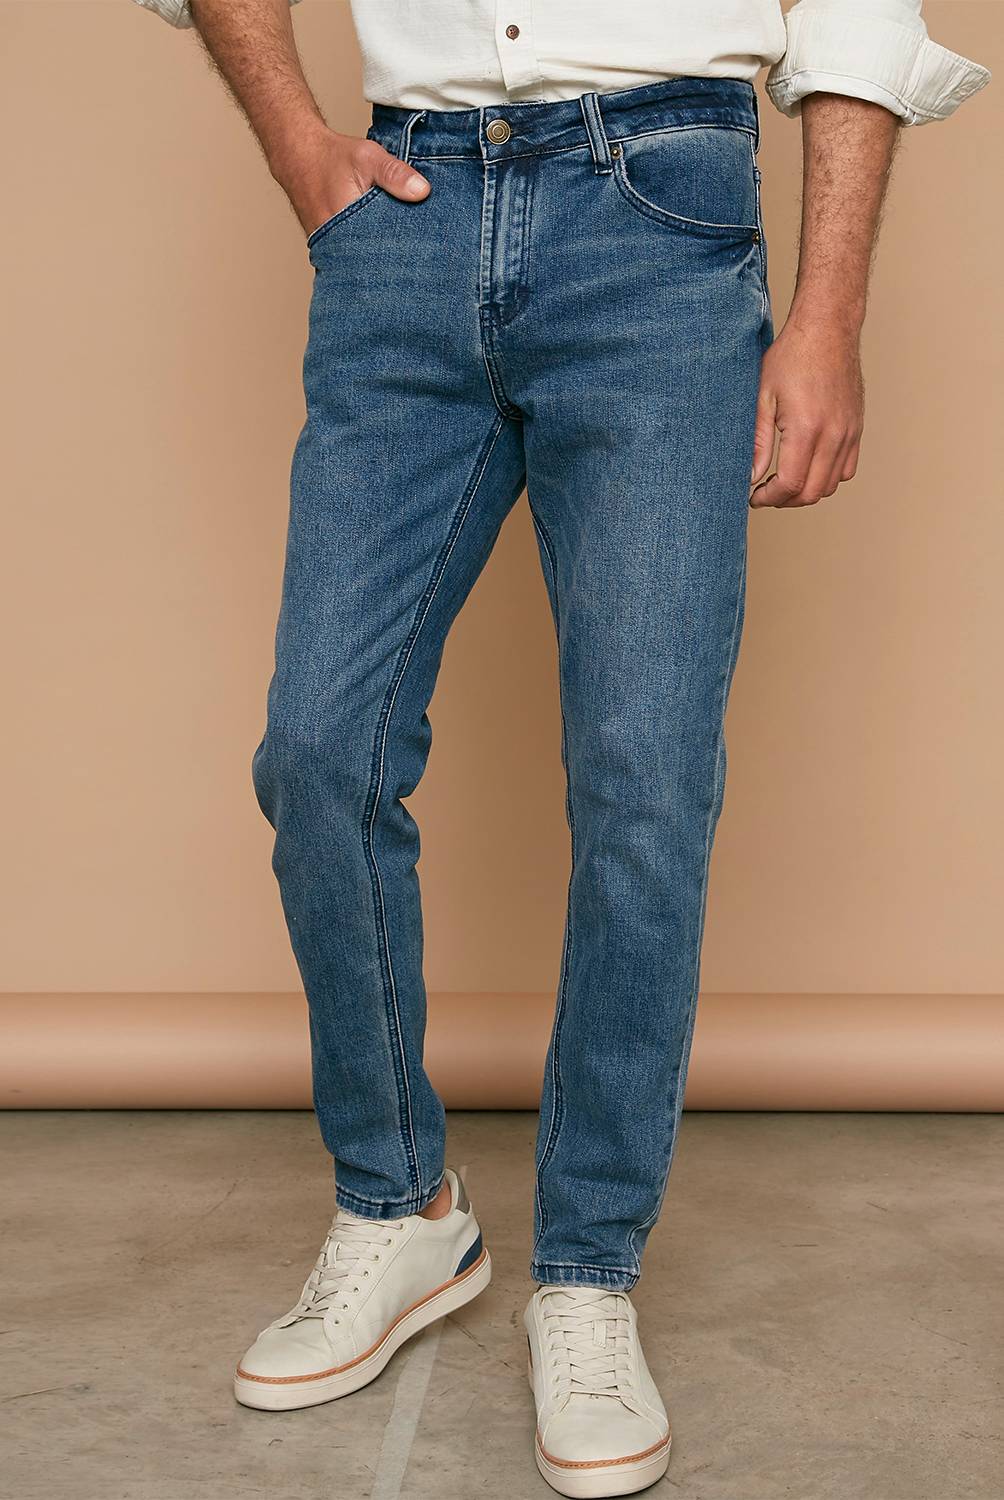 BASEMENT - Jeans Skinny Fit Hombre Basement